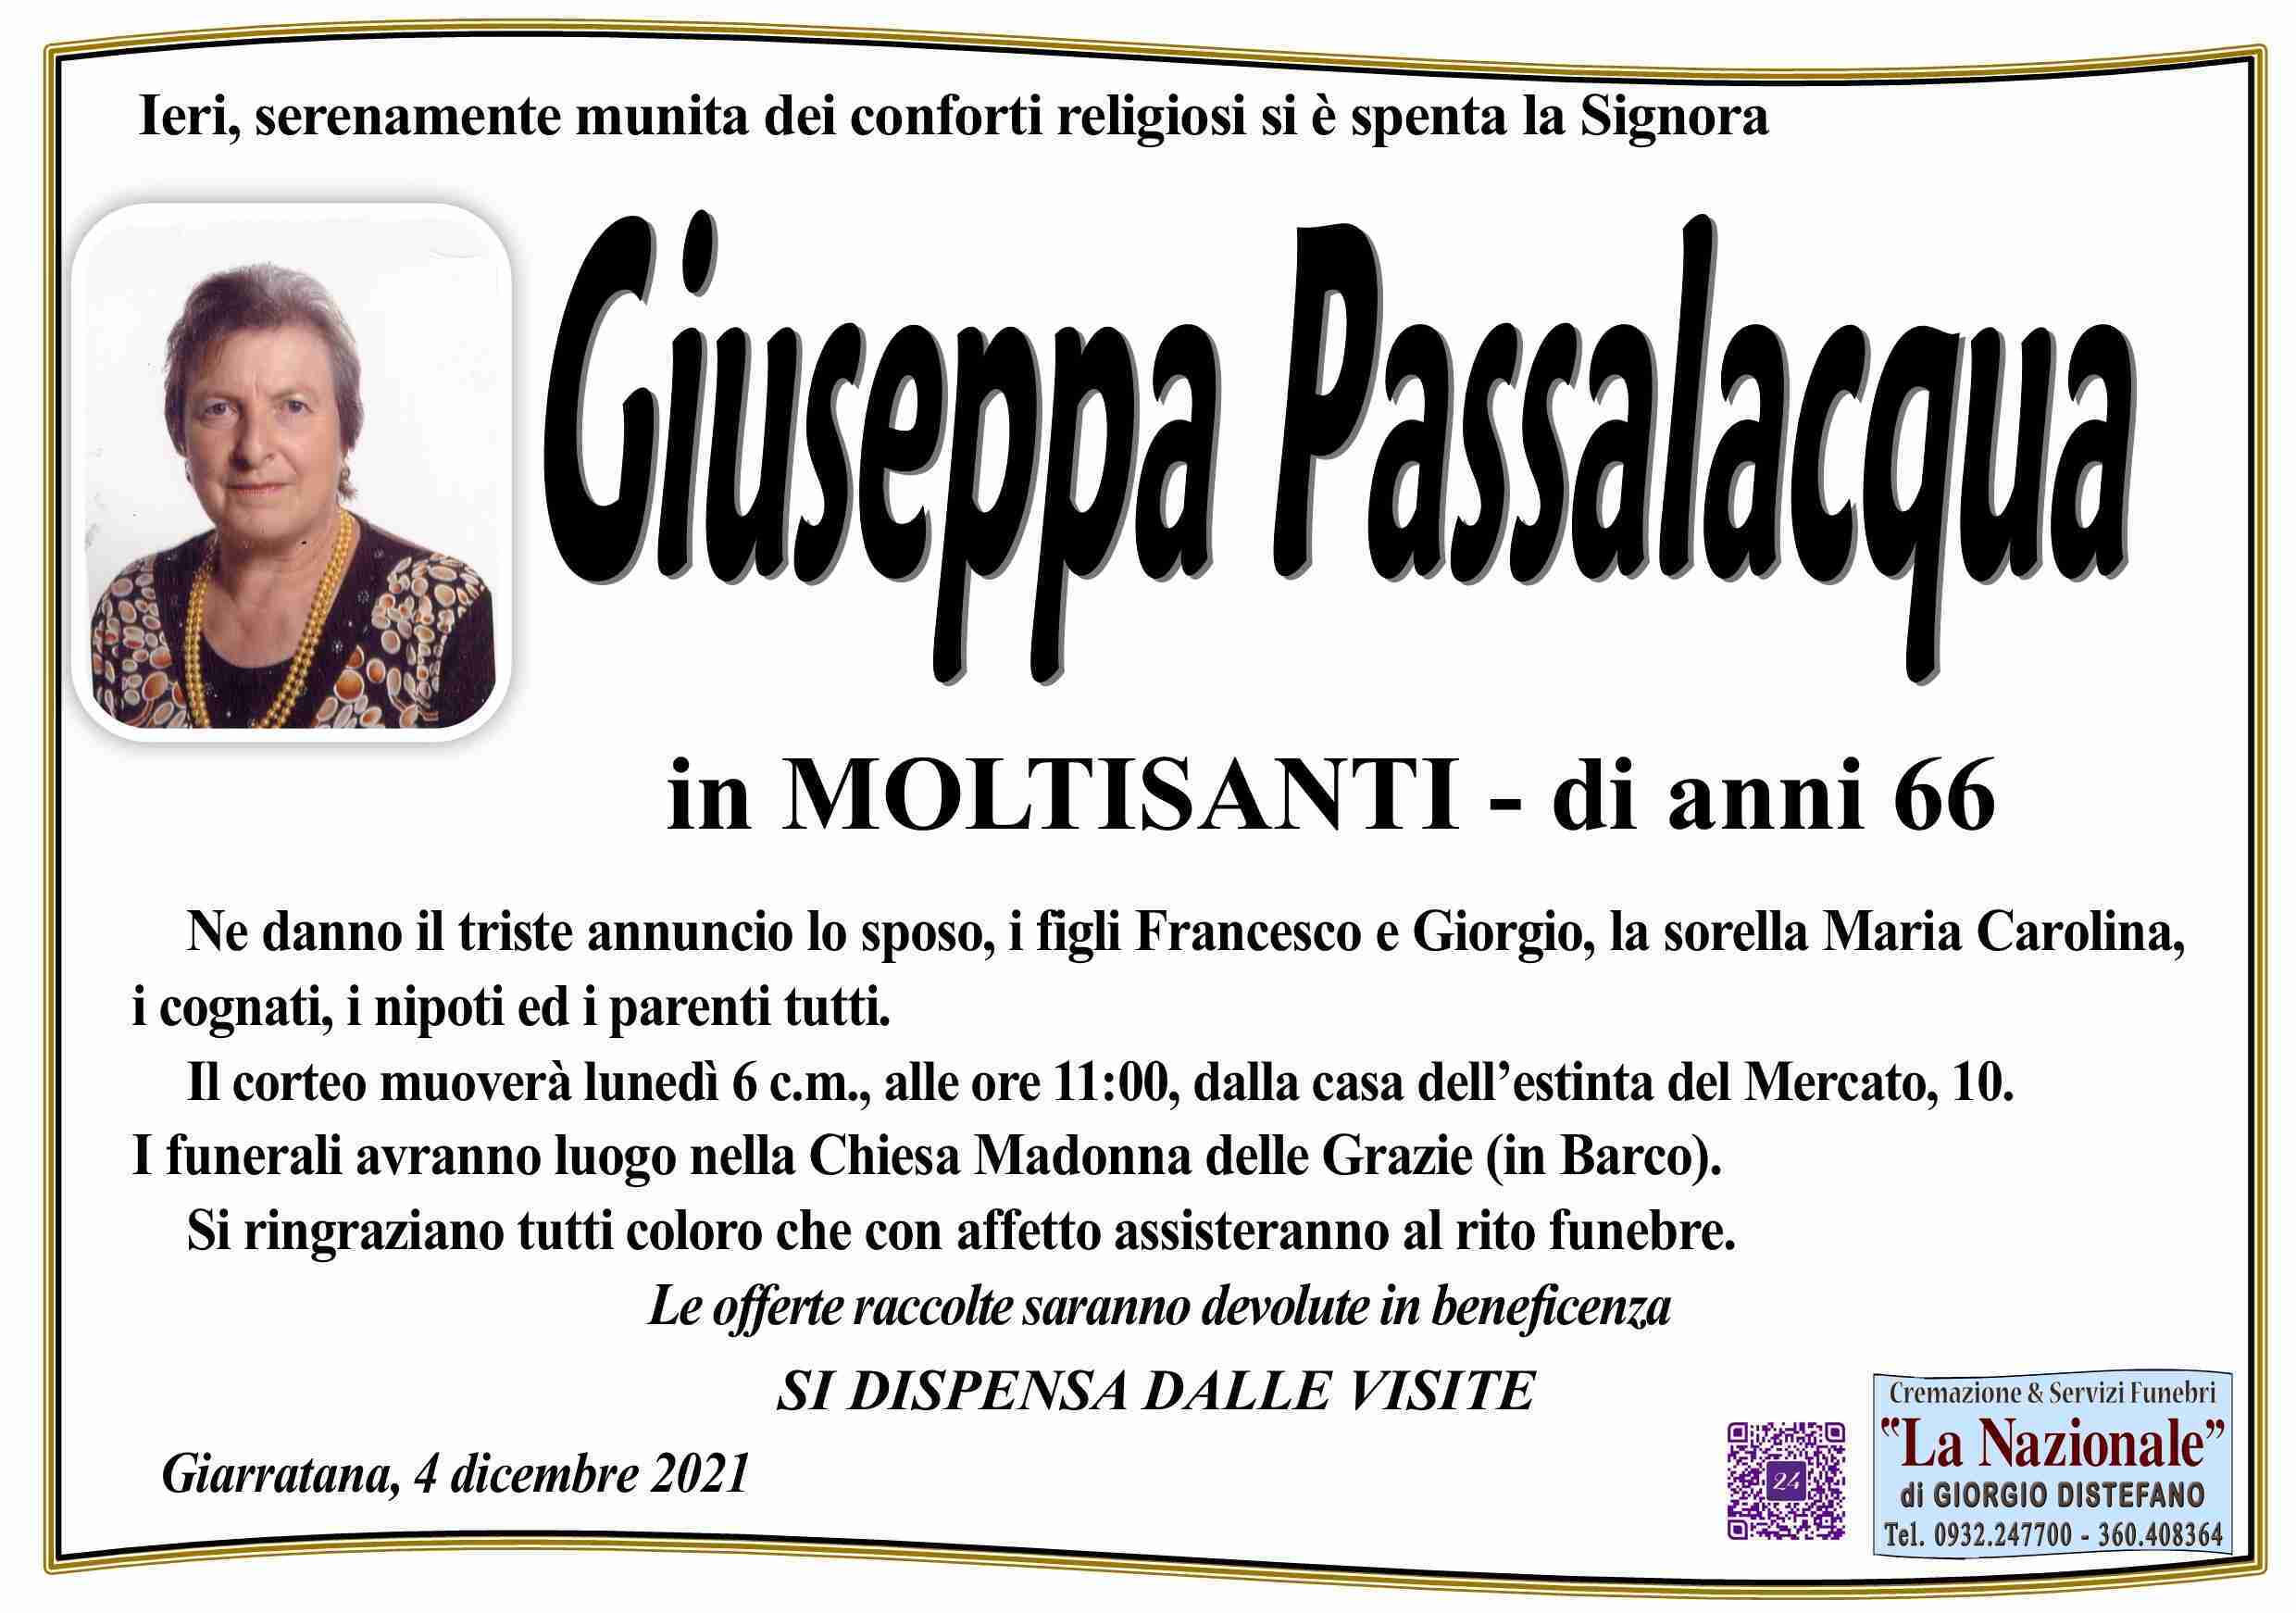 Giuseppa Passalacqua